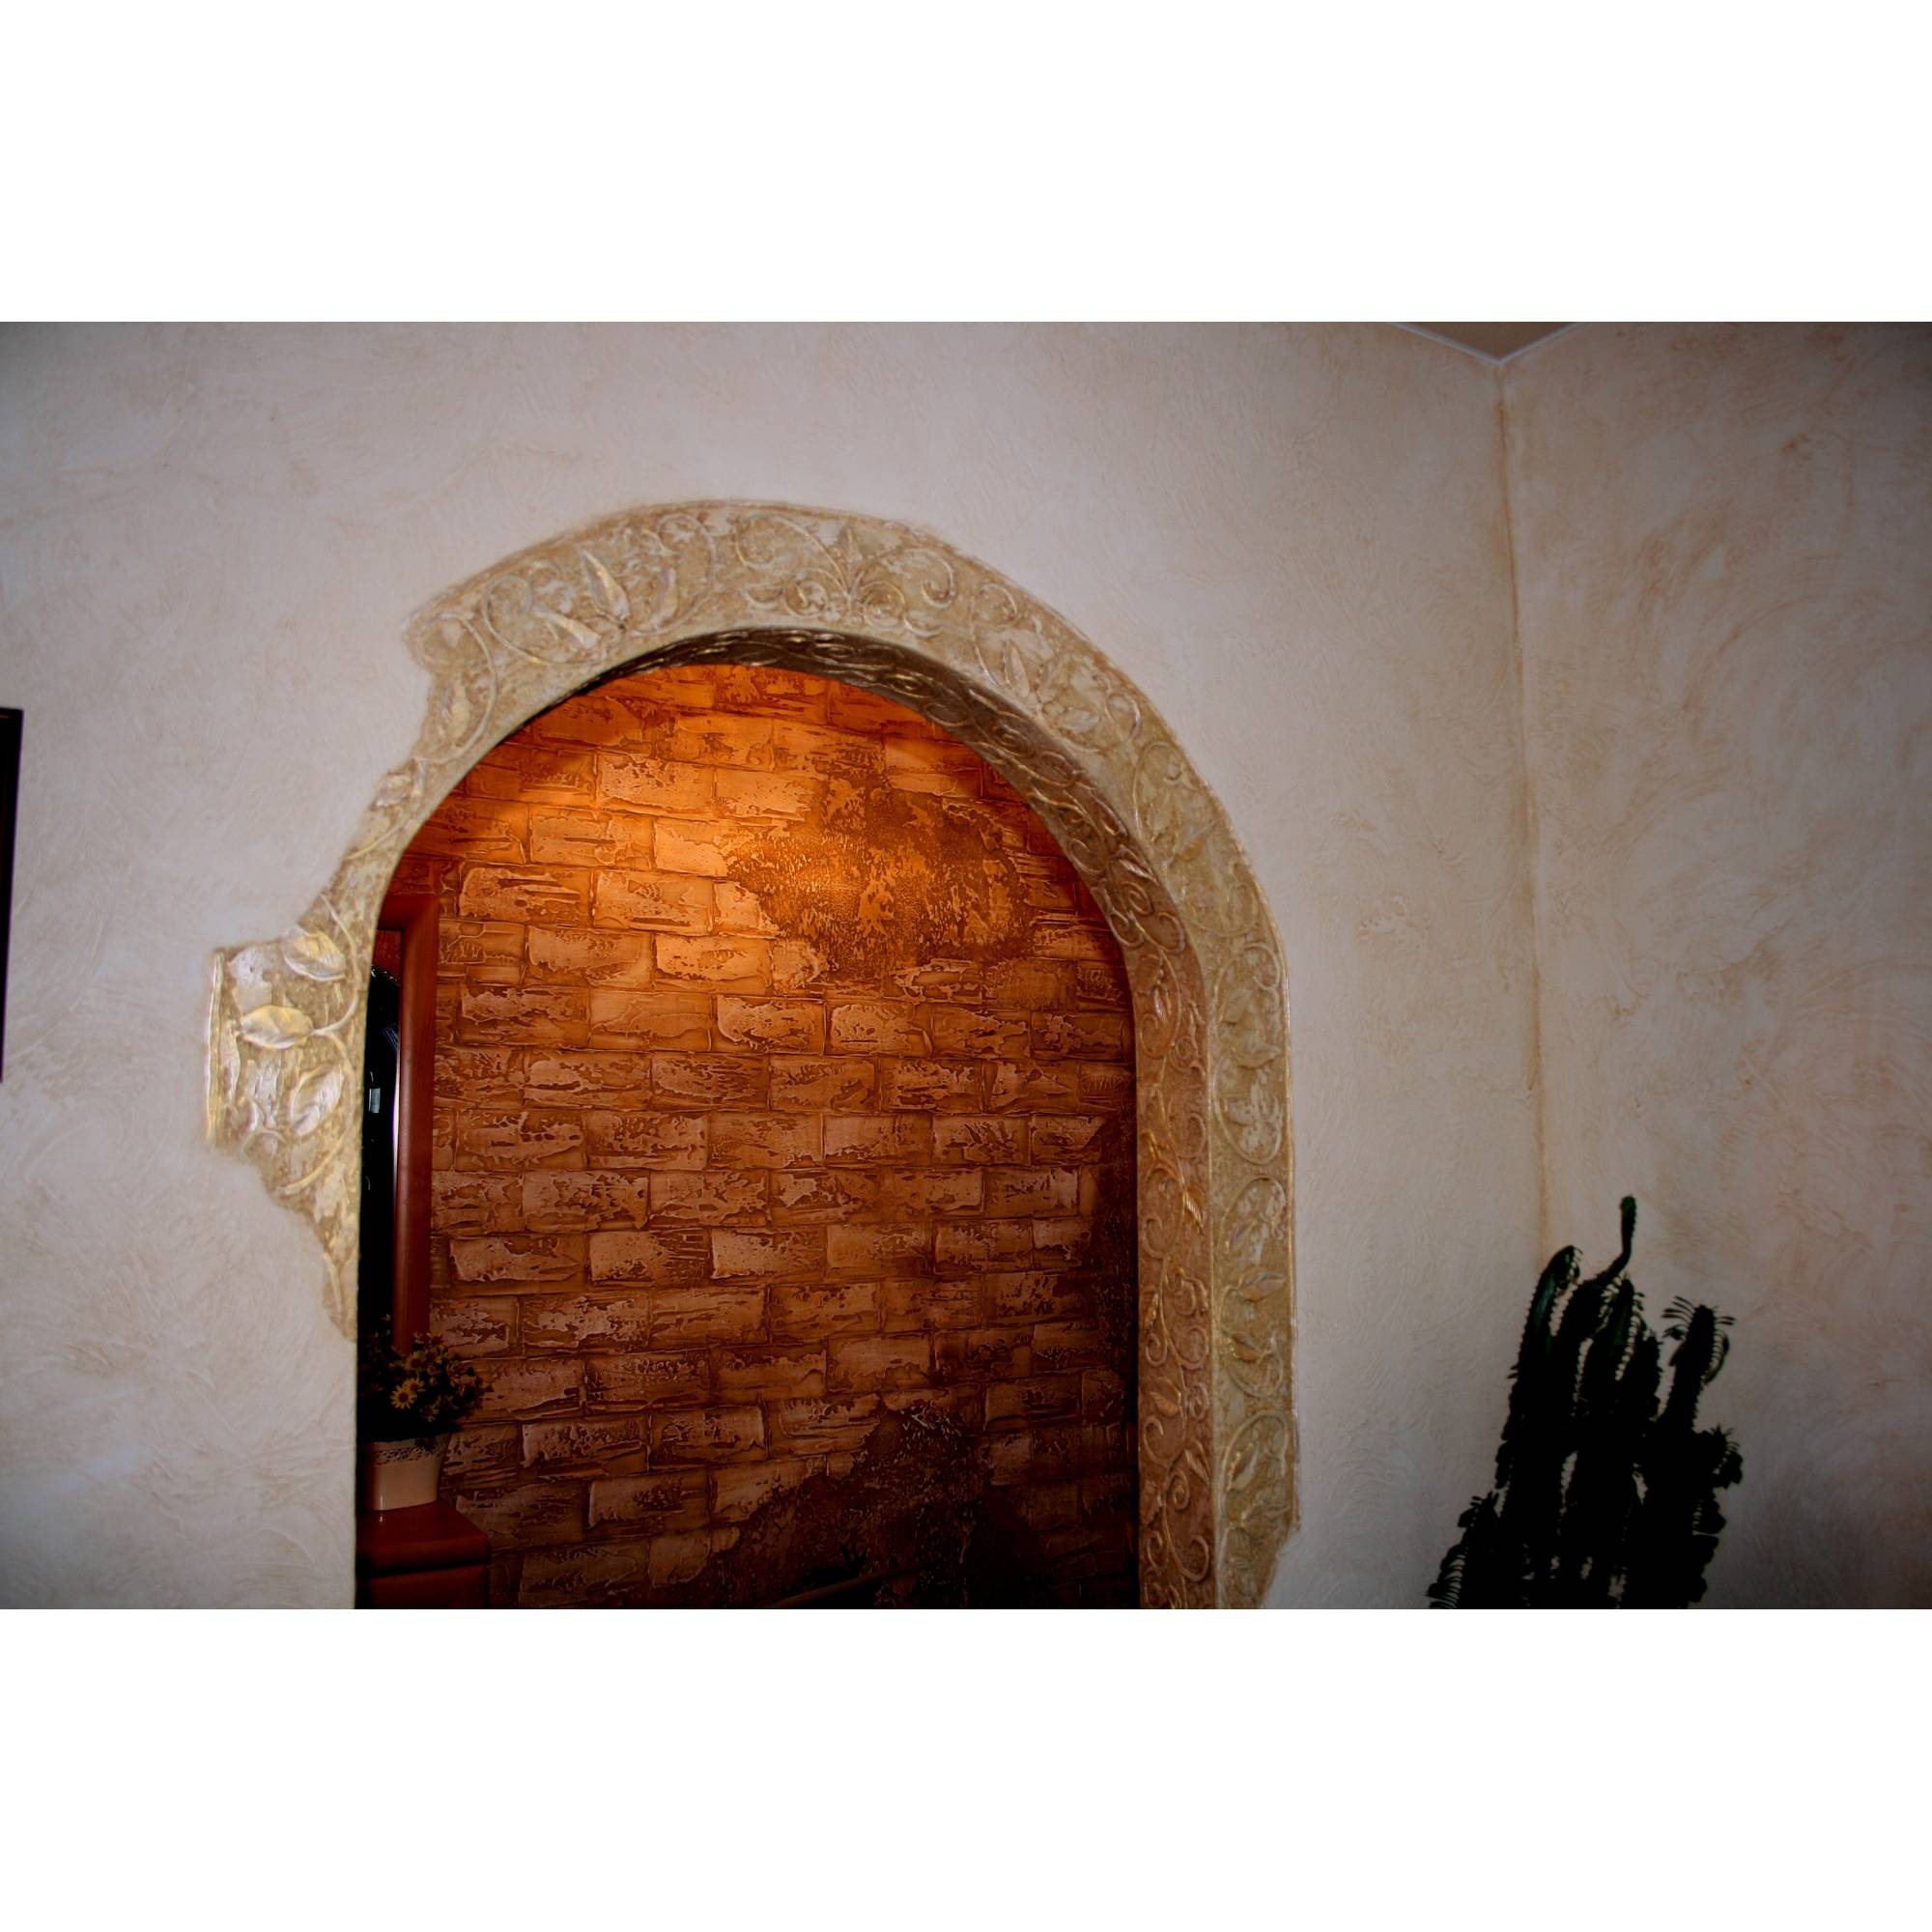  арок декоративным камнем:  арки декоративным камнем (51 .